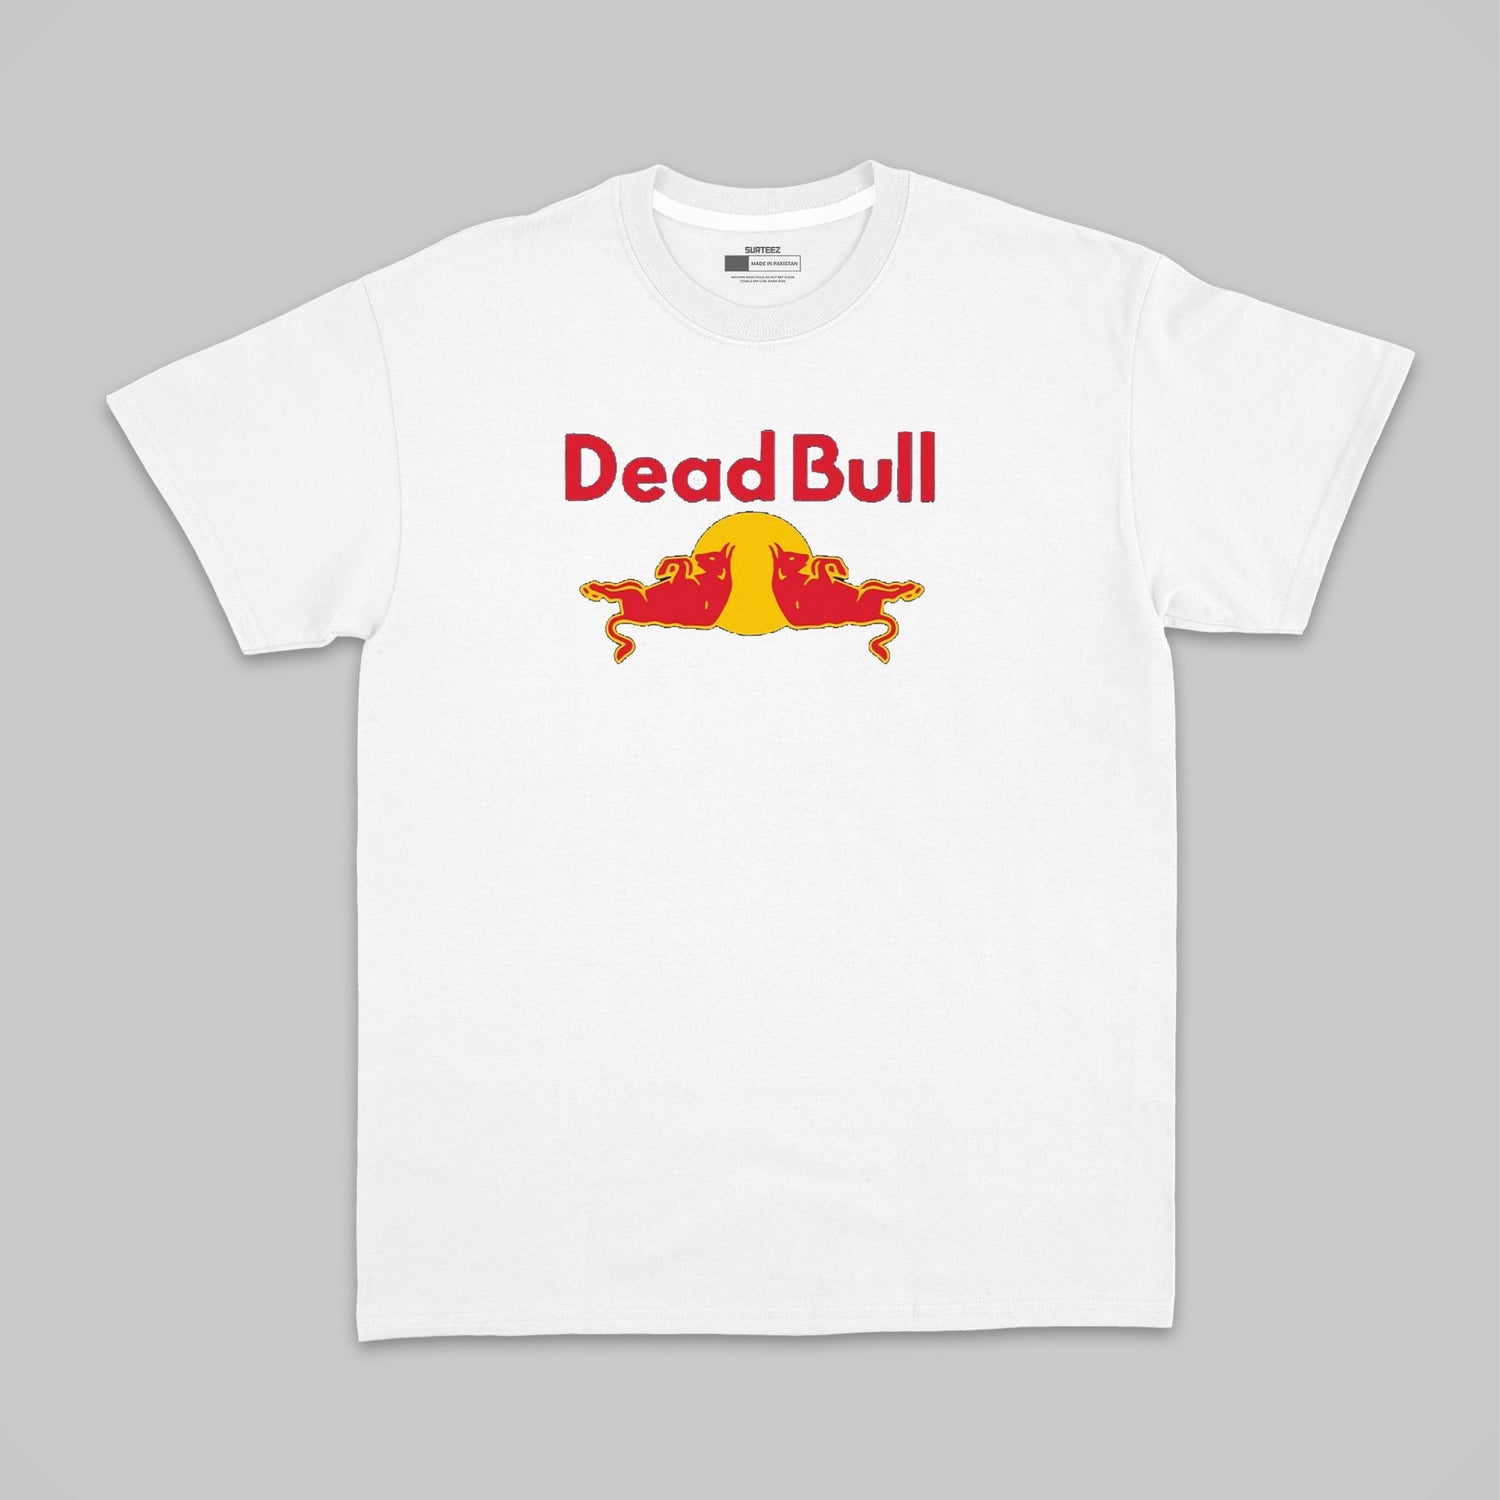 DeadBull Graphic Tshirt